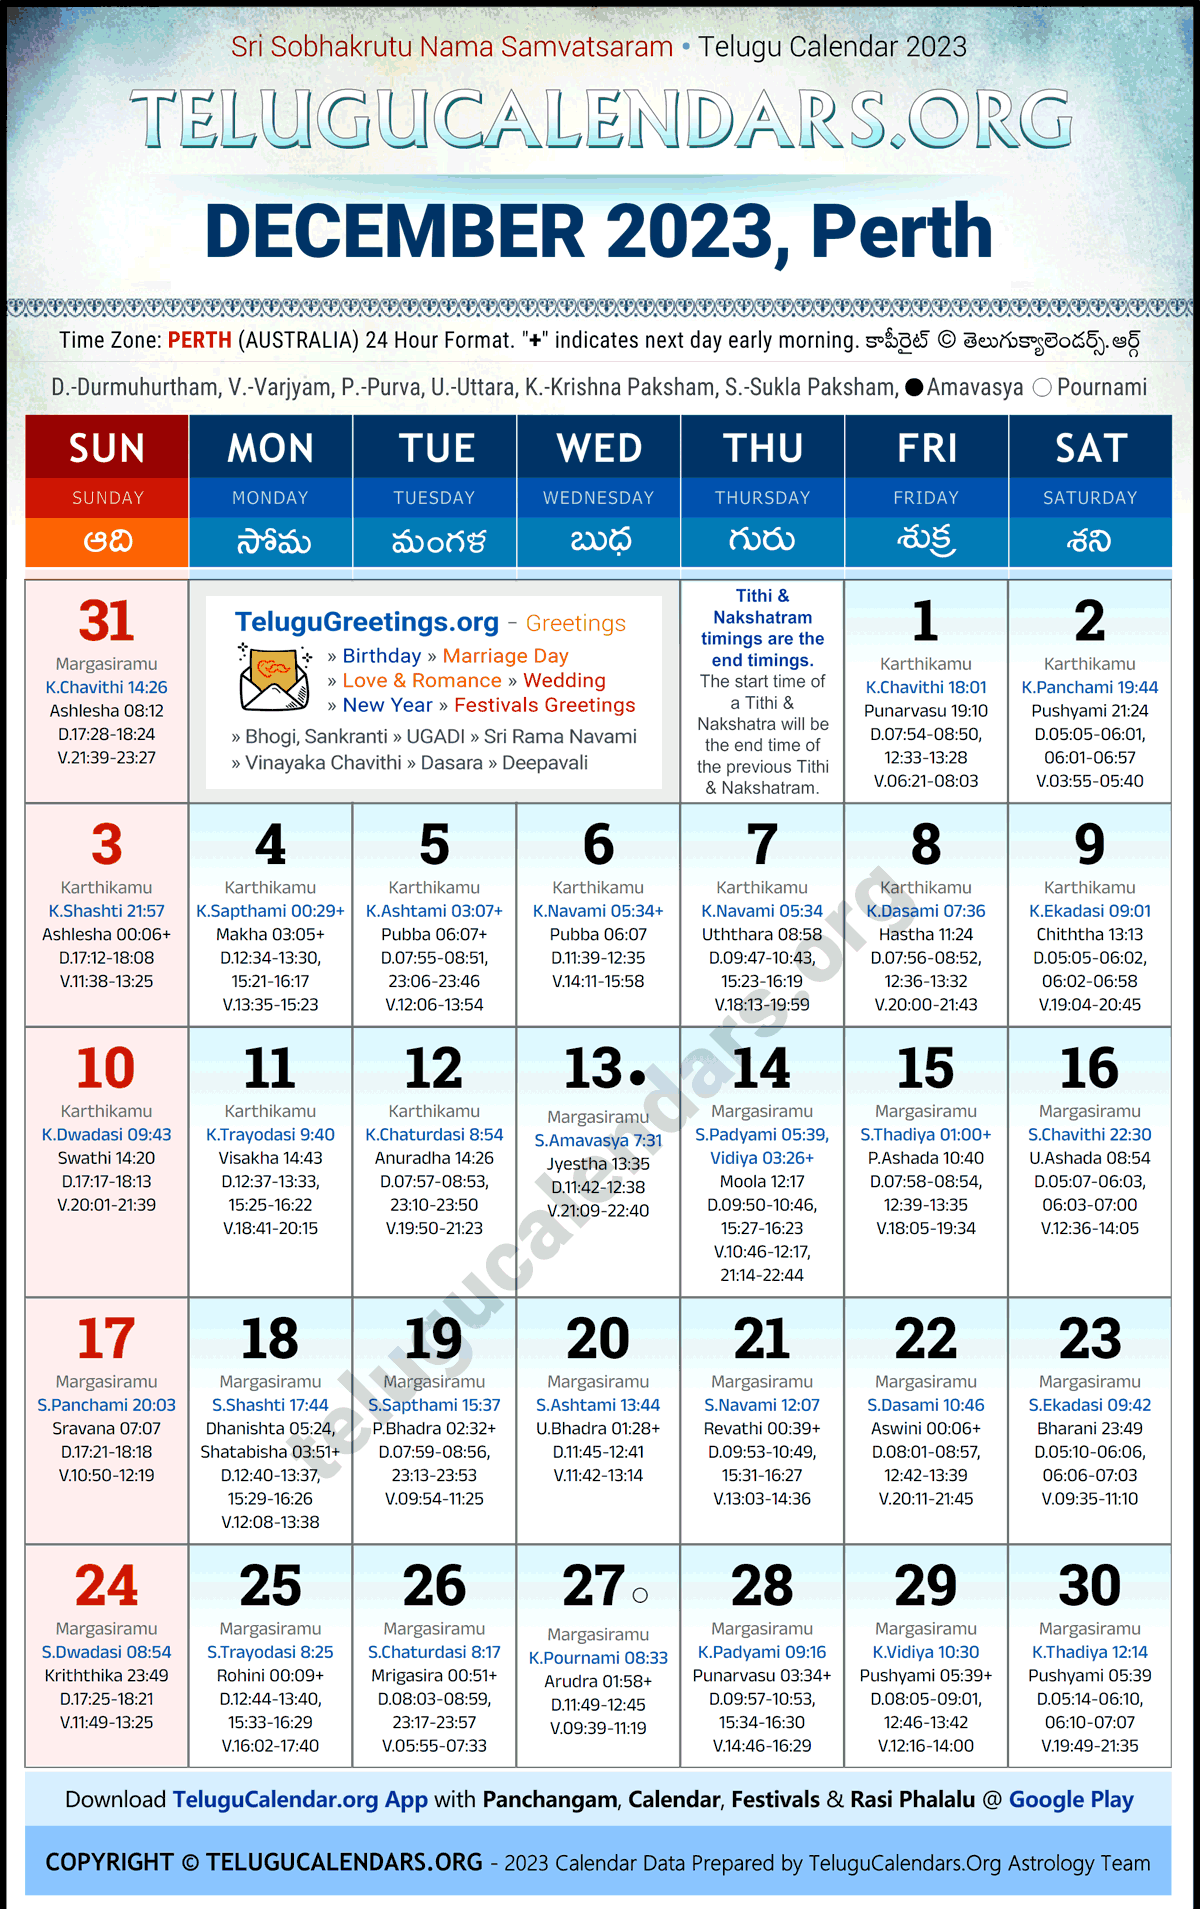 Telugu Calendar 2023 December Festivals for Perth